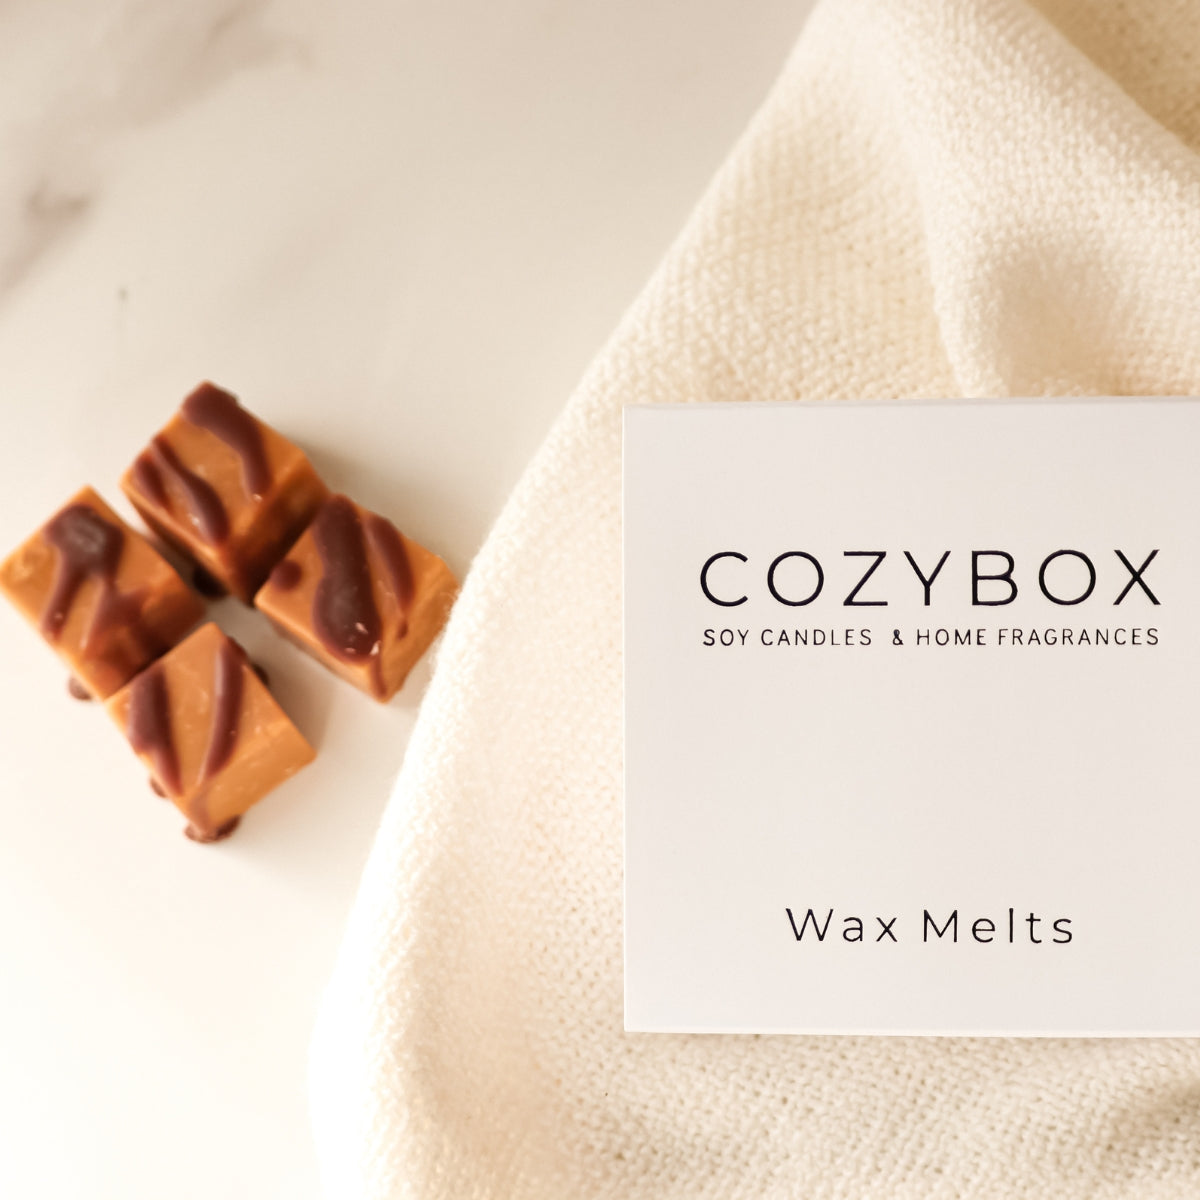 Cozybox Κυβάκια Wax Melts Whiskey & Caramel από Κερί Eλαιοκράμβης